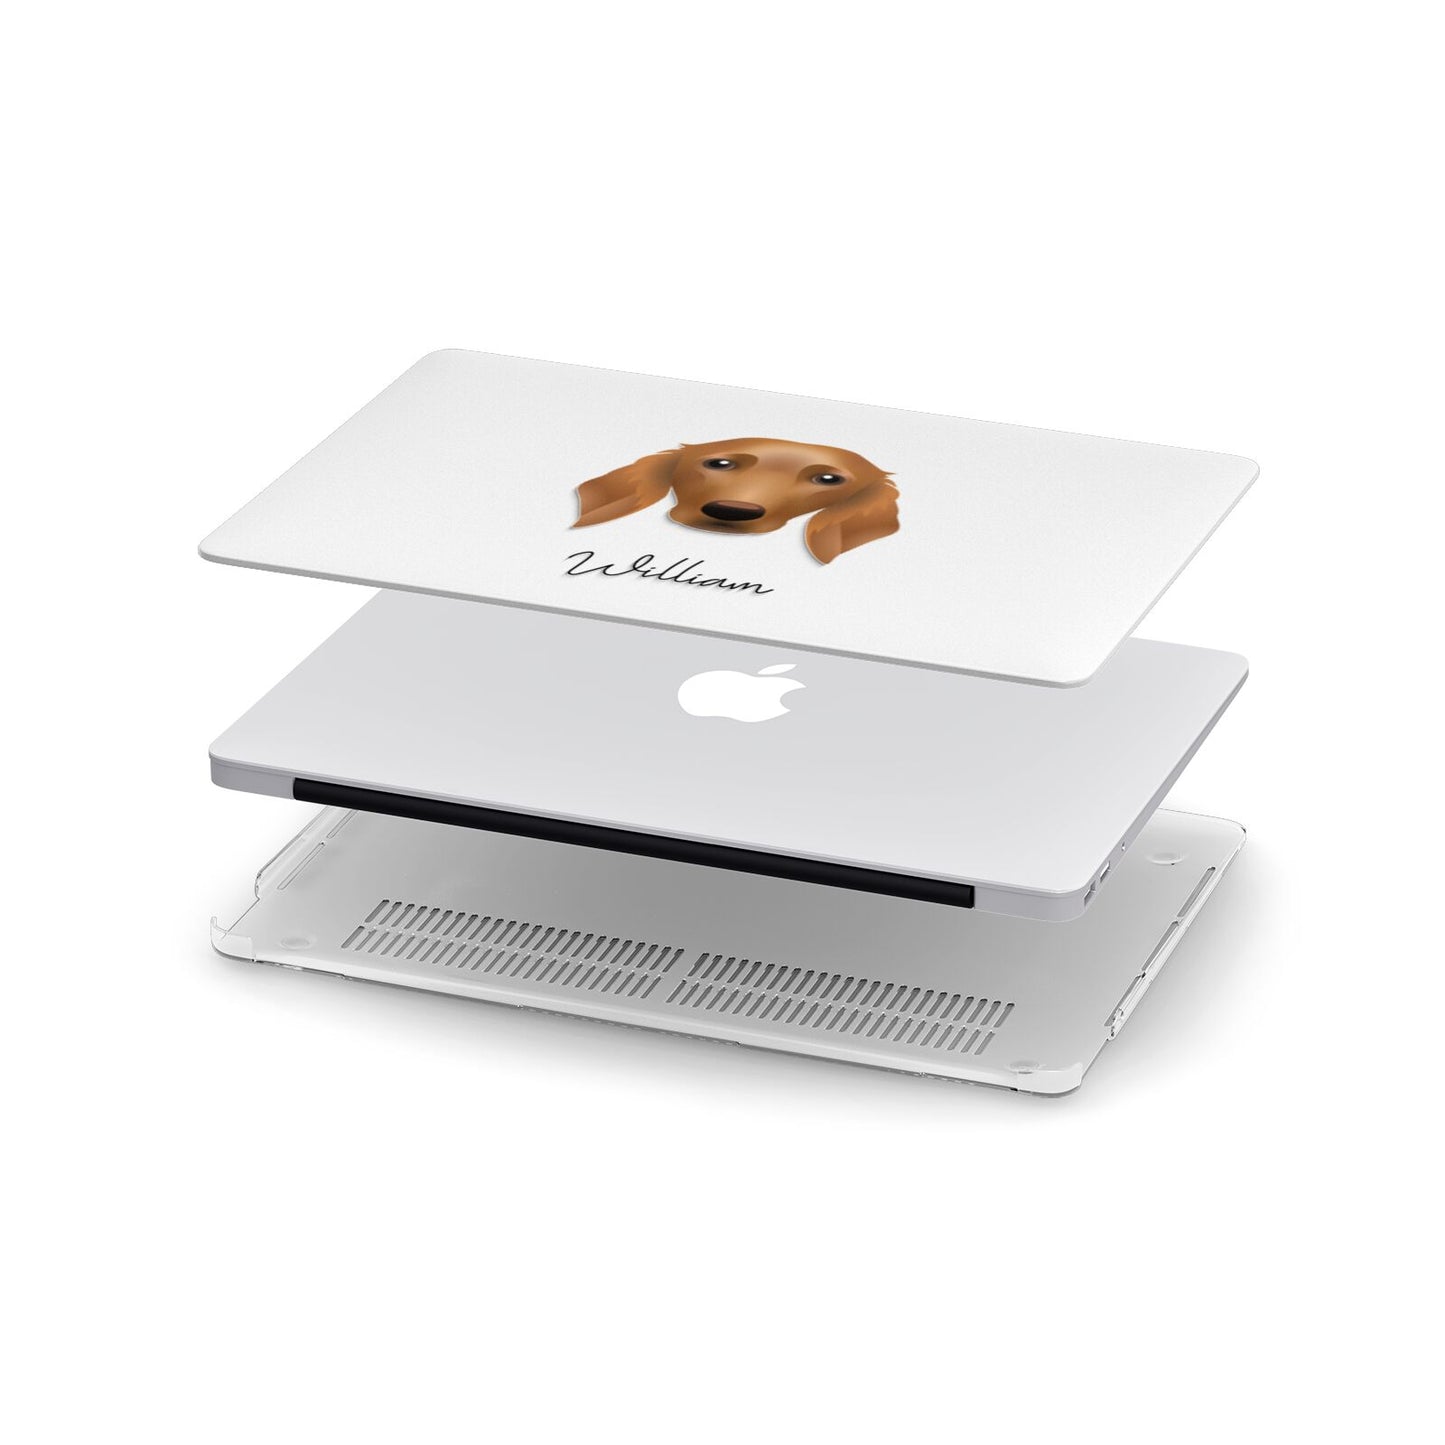 Golden Dox Personalised Apple MacBook Case in Detail